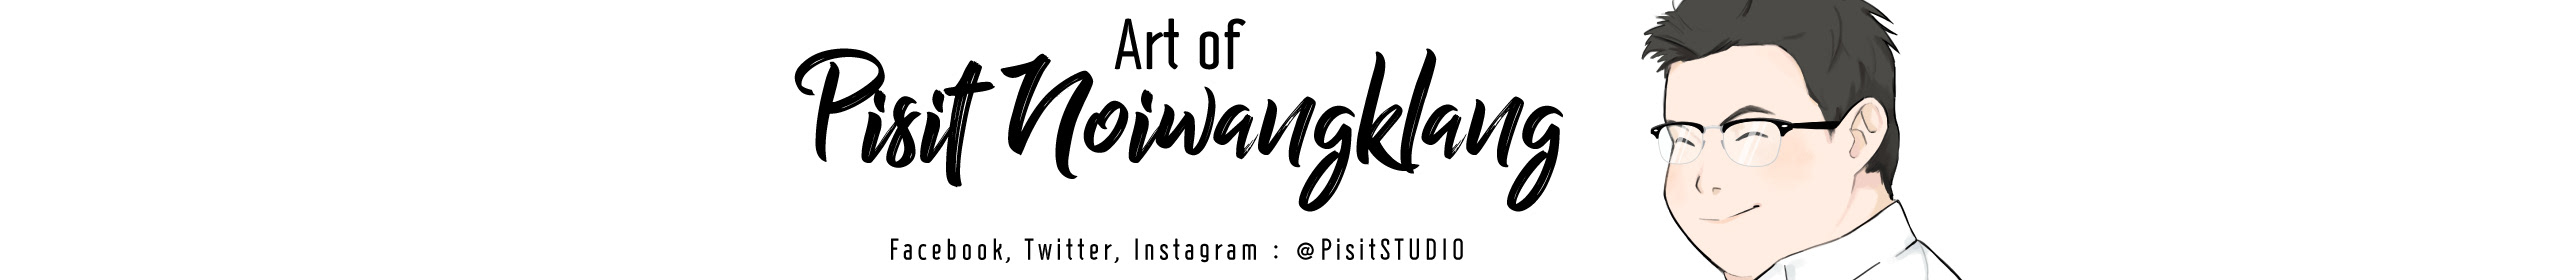 Banner de perfil de Pisit Noiwangklang